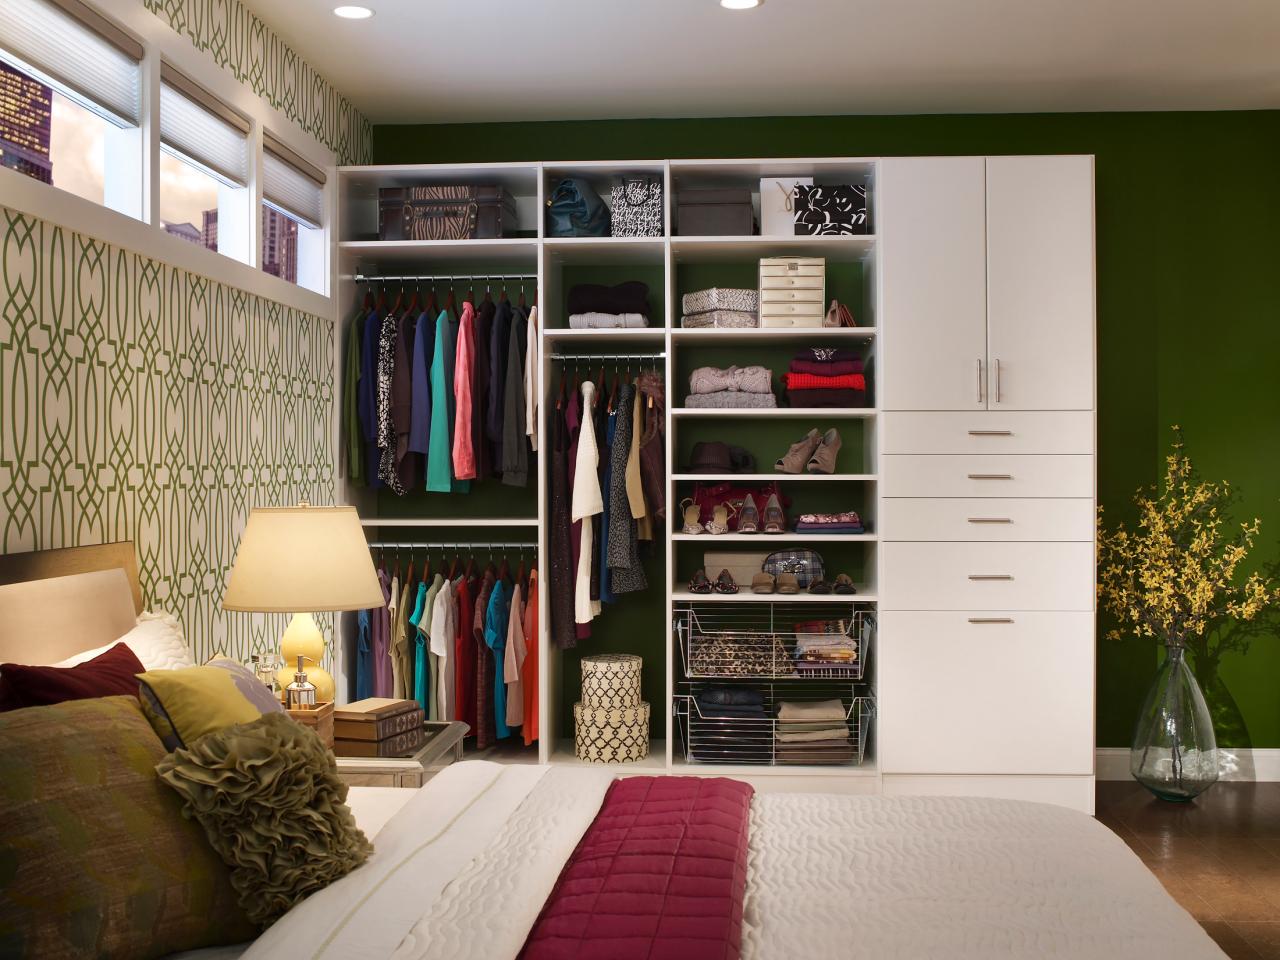 5 steps to organizing your closet | hgtv